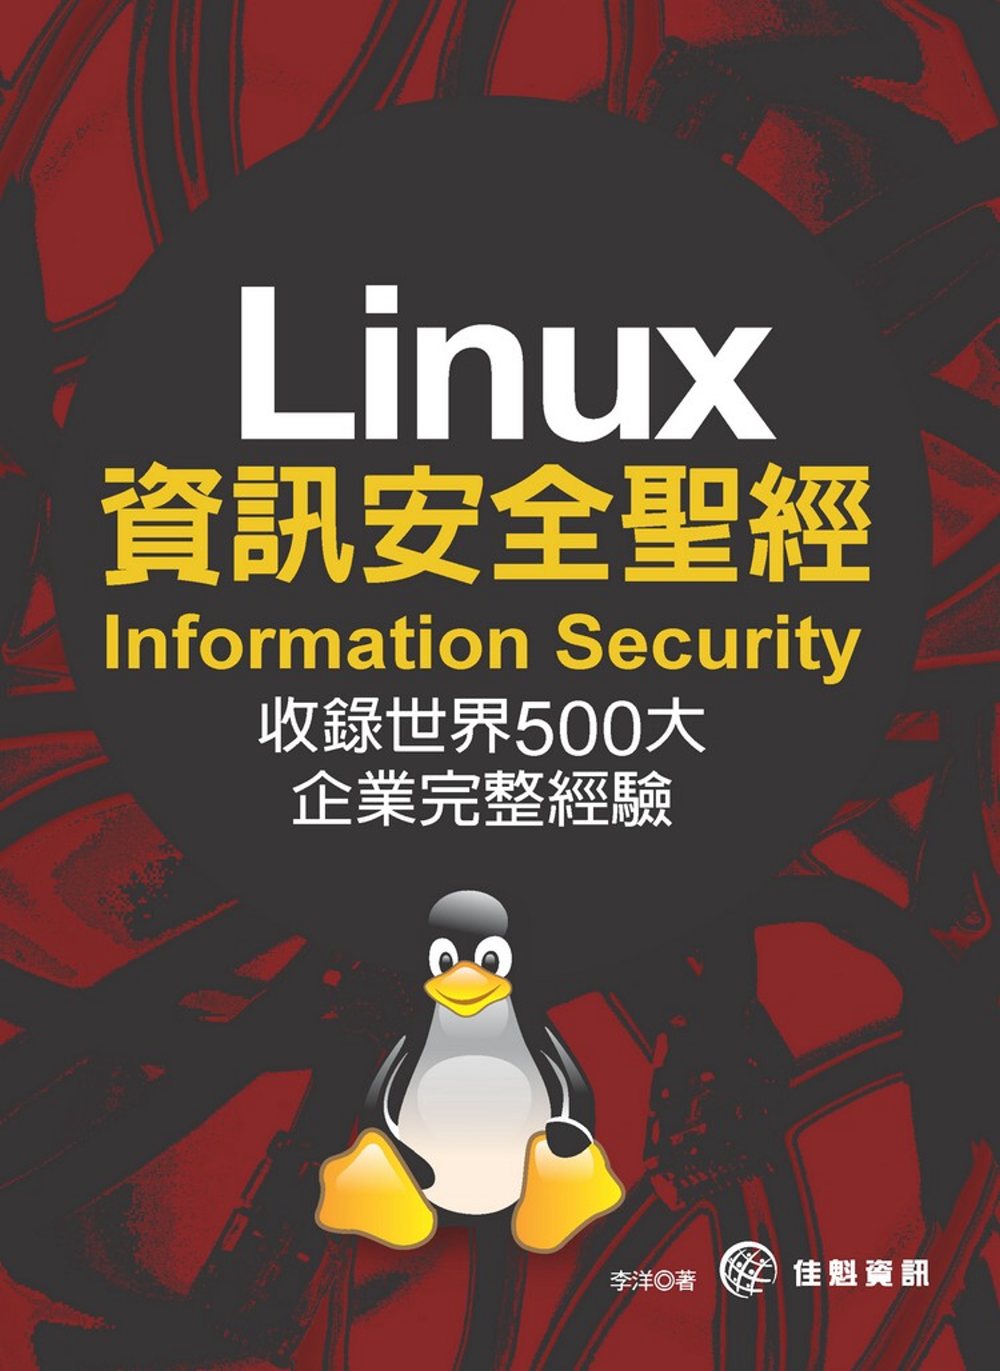 ►GO►最新優惠► 【書籍】Linux資訊安全聖經(Information Security)：收錄世界500大企業完整經驗